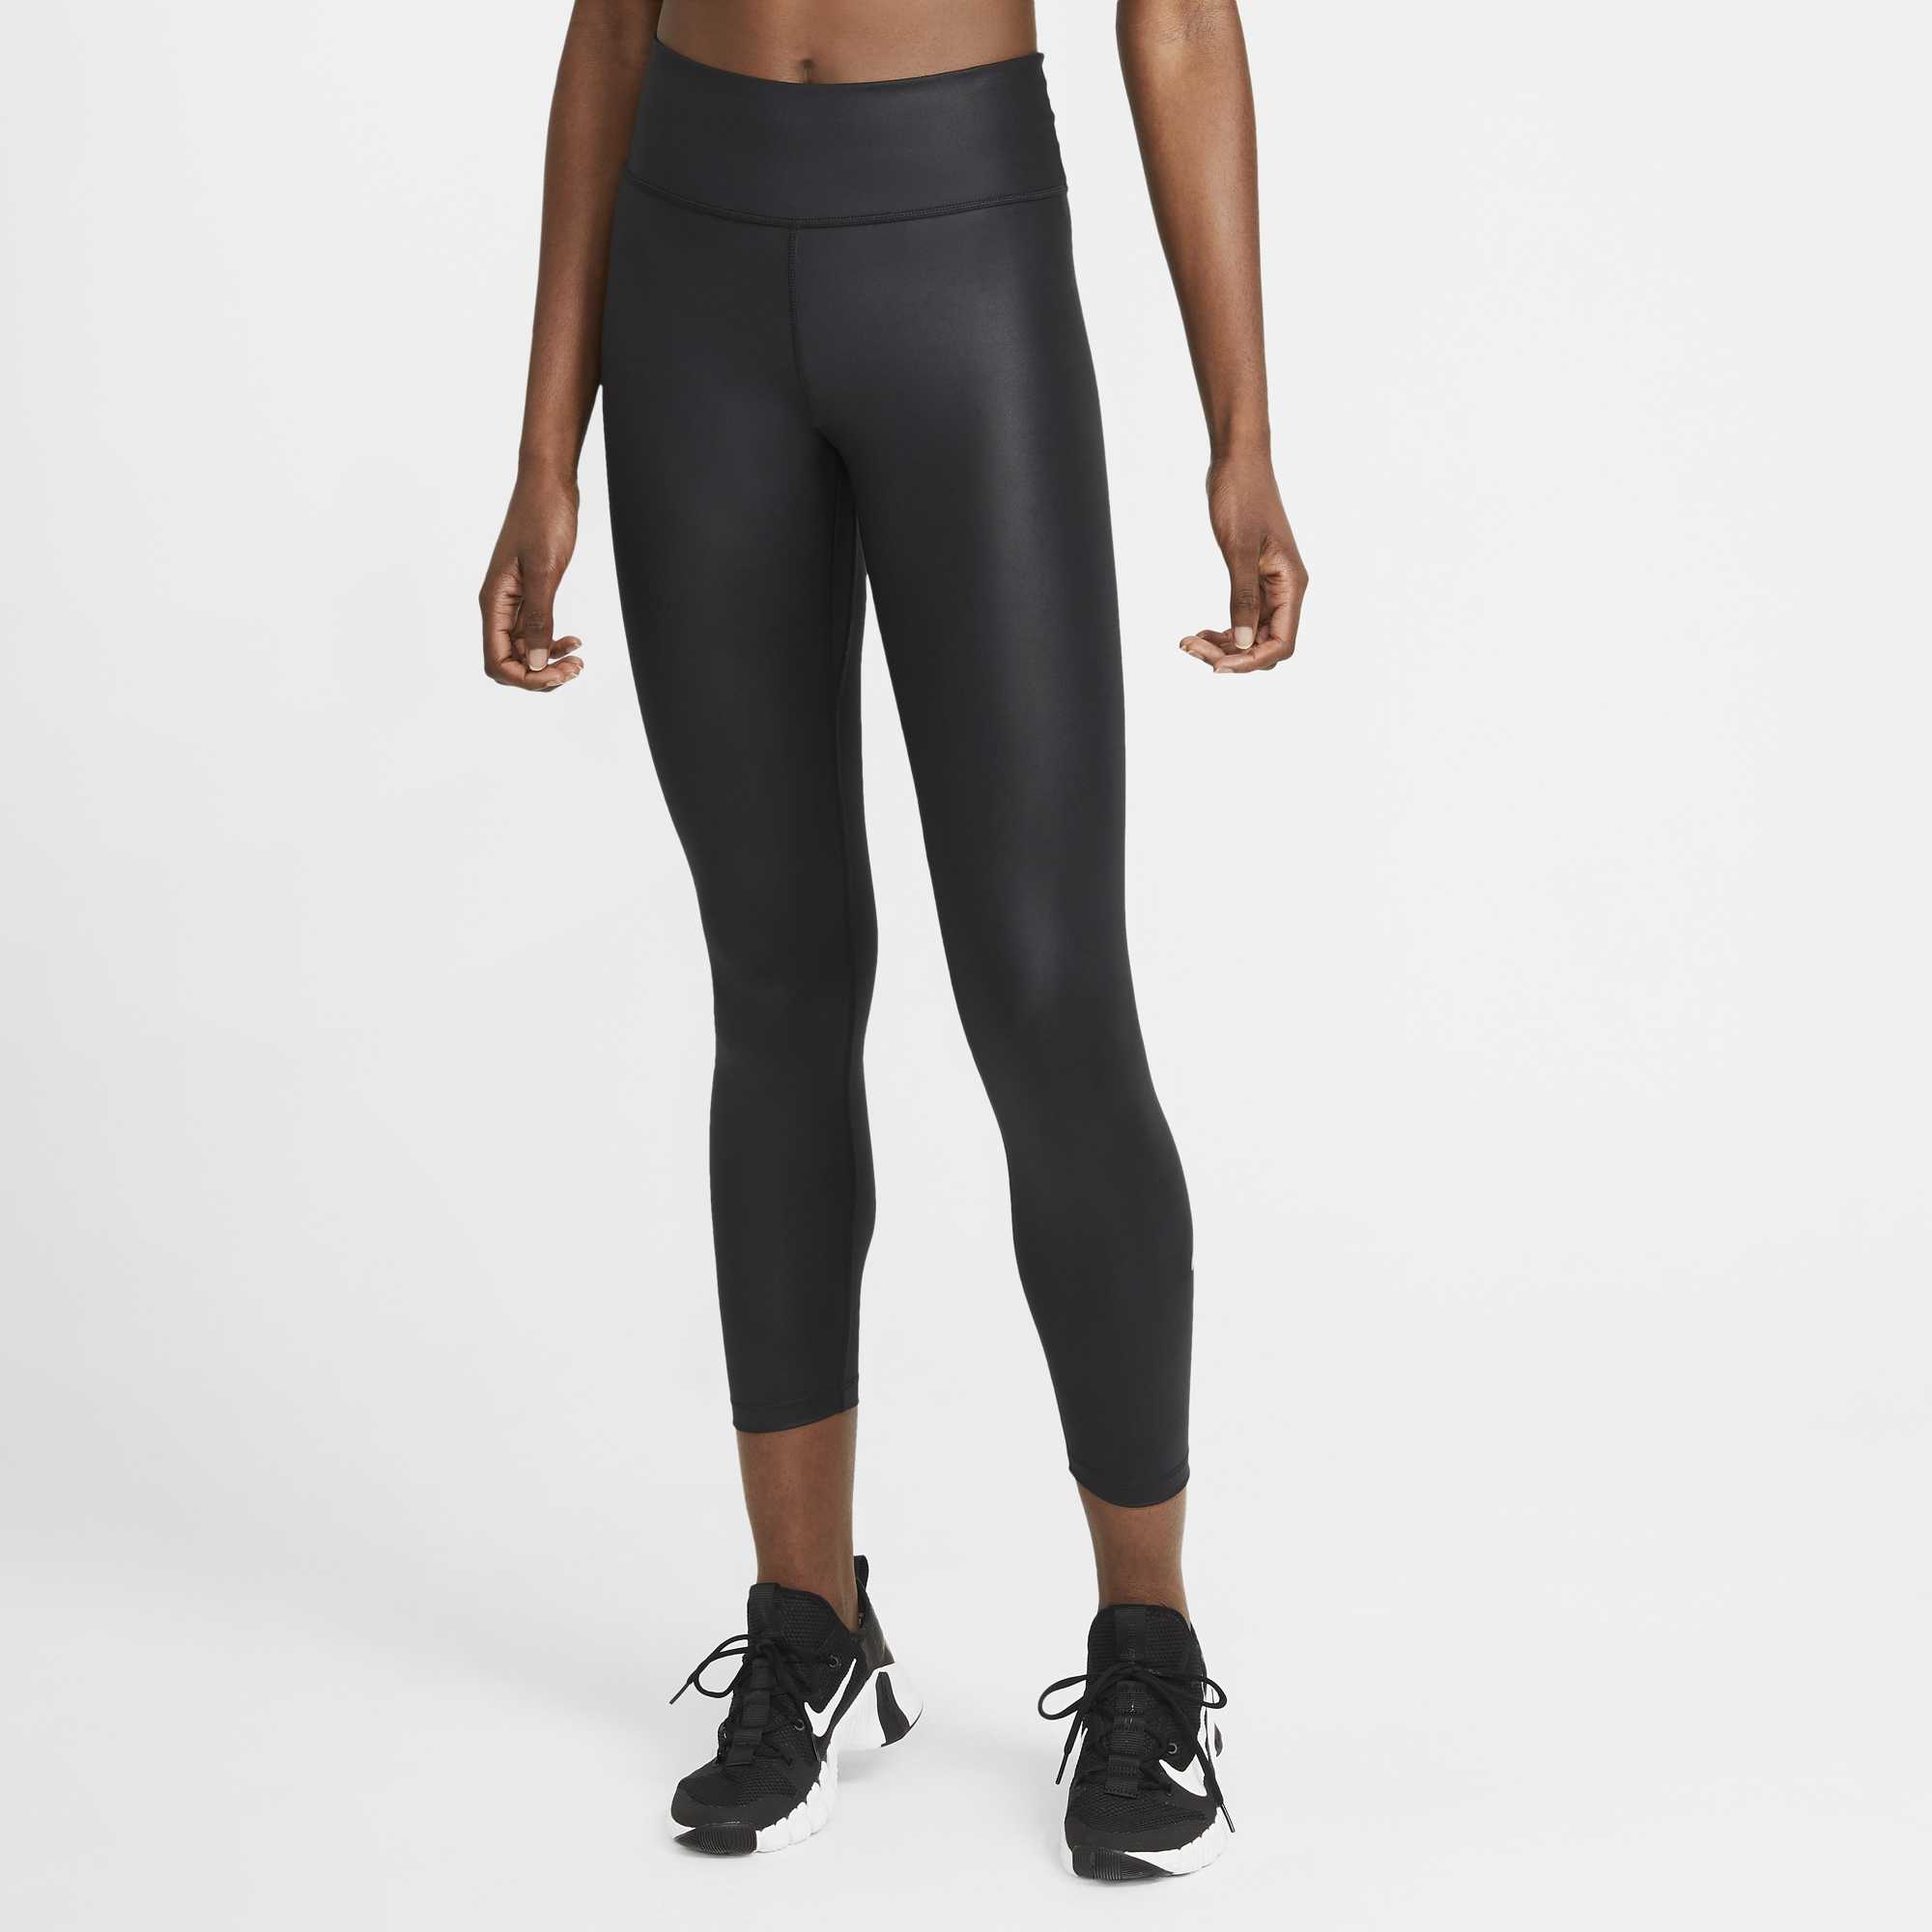 Nike One 7/8 Faux Leather Legging - Women's